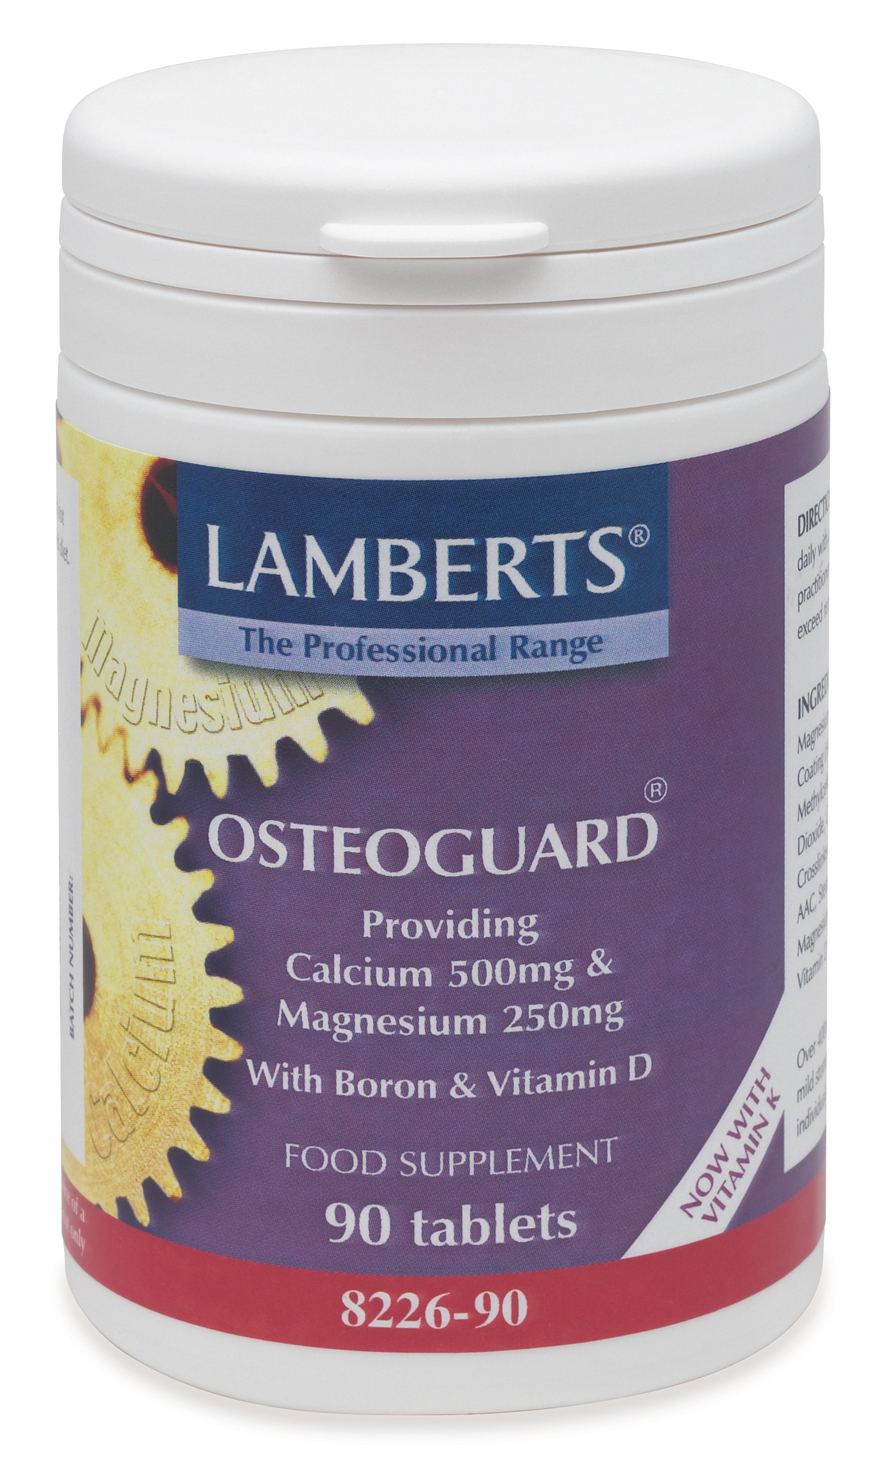 OSTEOGUARD – Kalcium Magnesium Bor (90 tabletter)